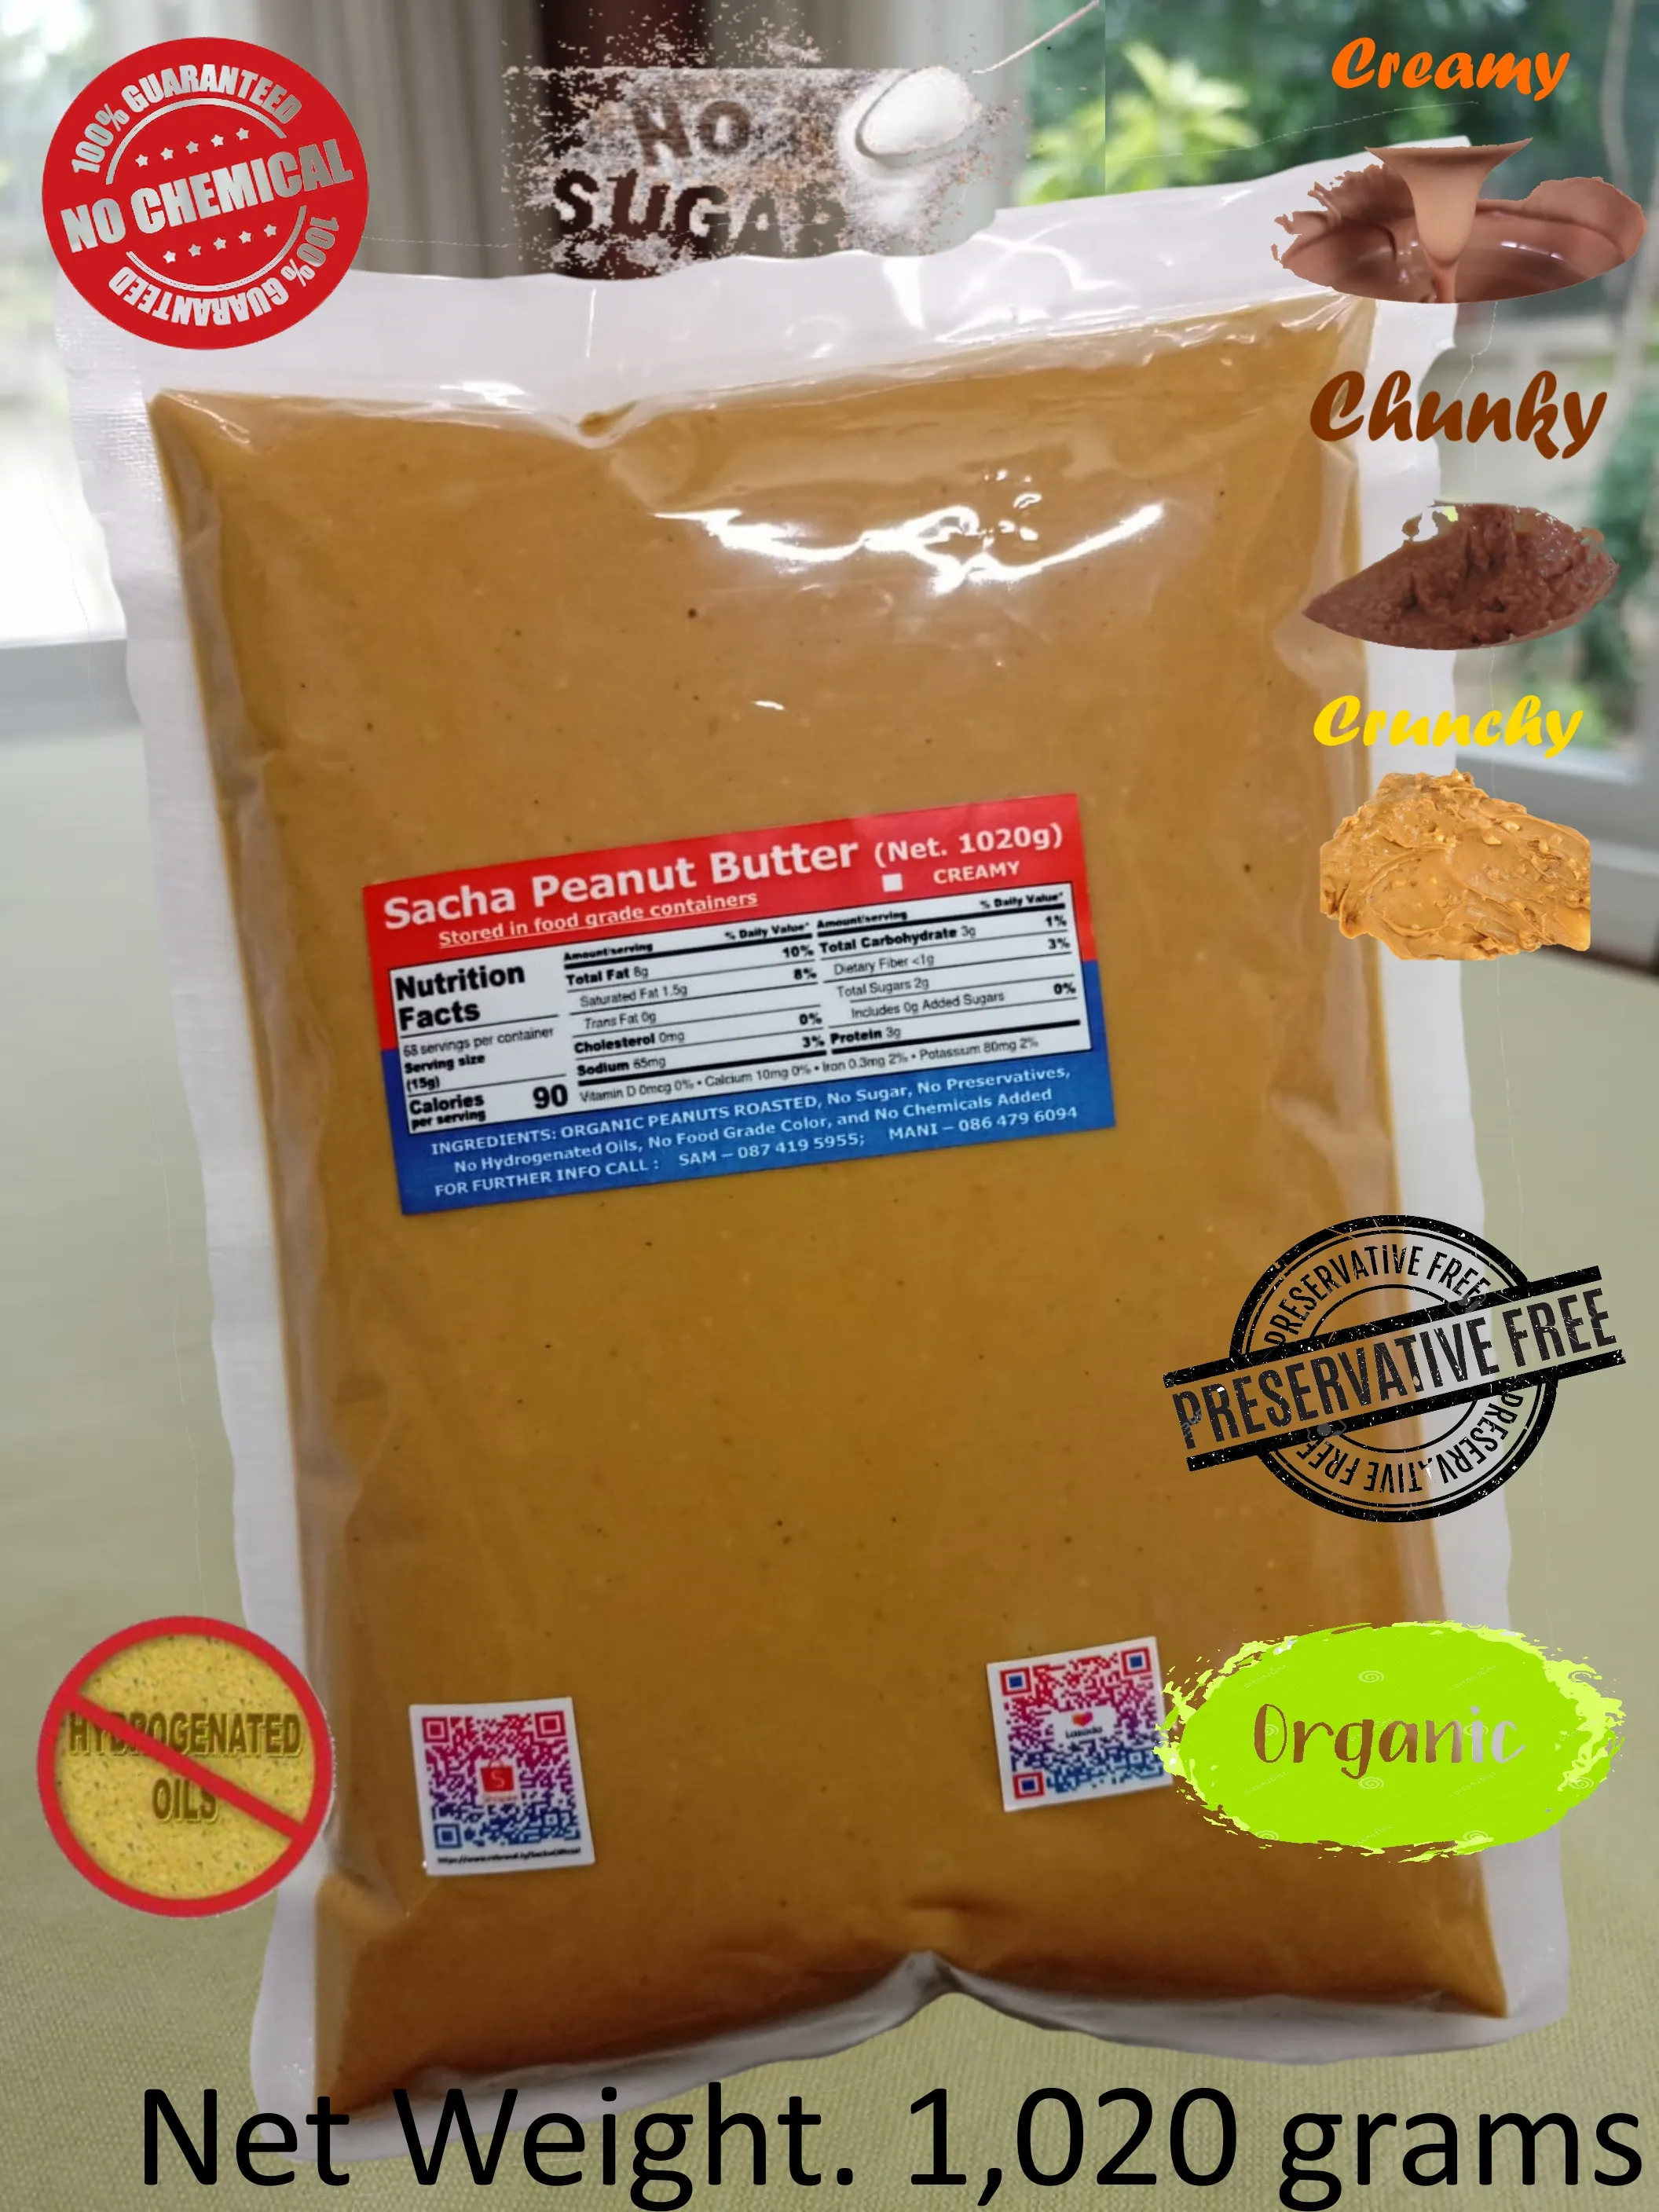 Sacha Peanut Butter (Creamy / Chunky / Crunchy) All Natural Organic (1,020 grams) - Free Delivery, ซาช่า-เนยถั่ว (ส่งฟรี)